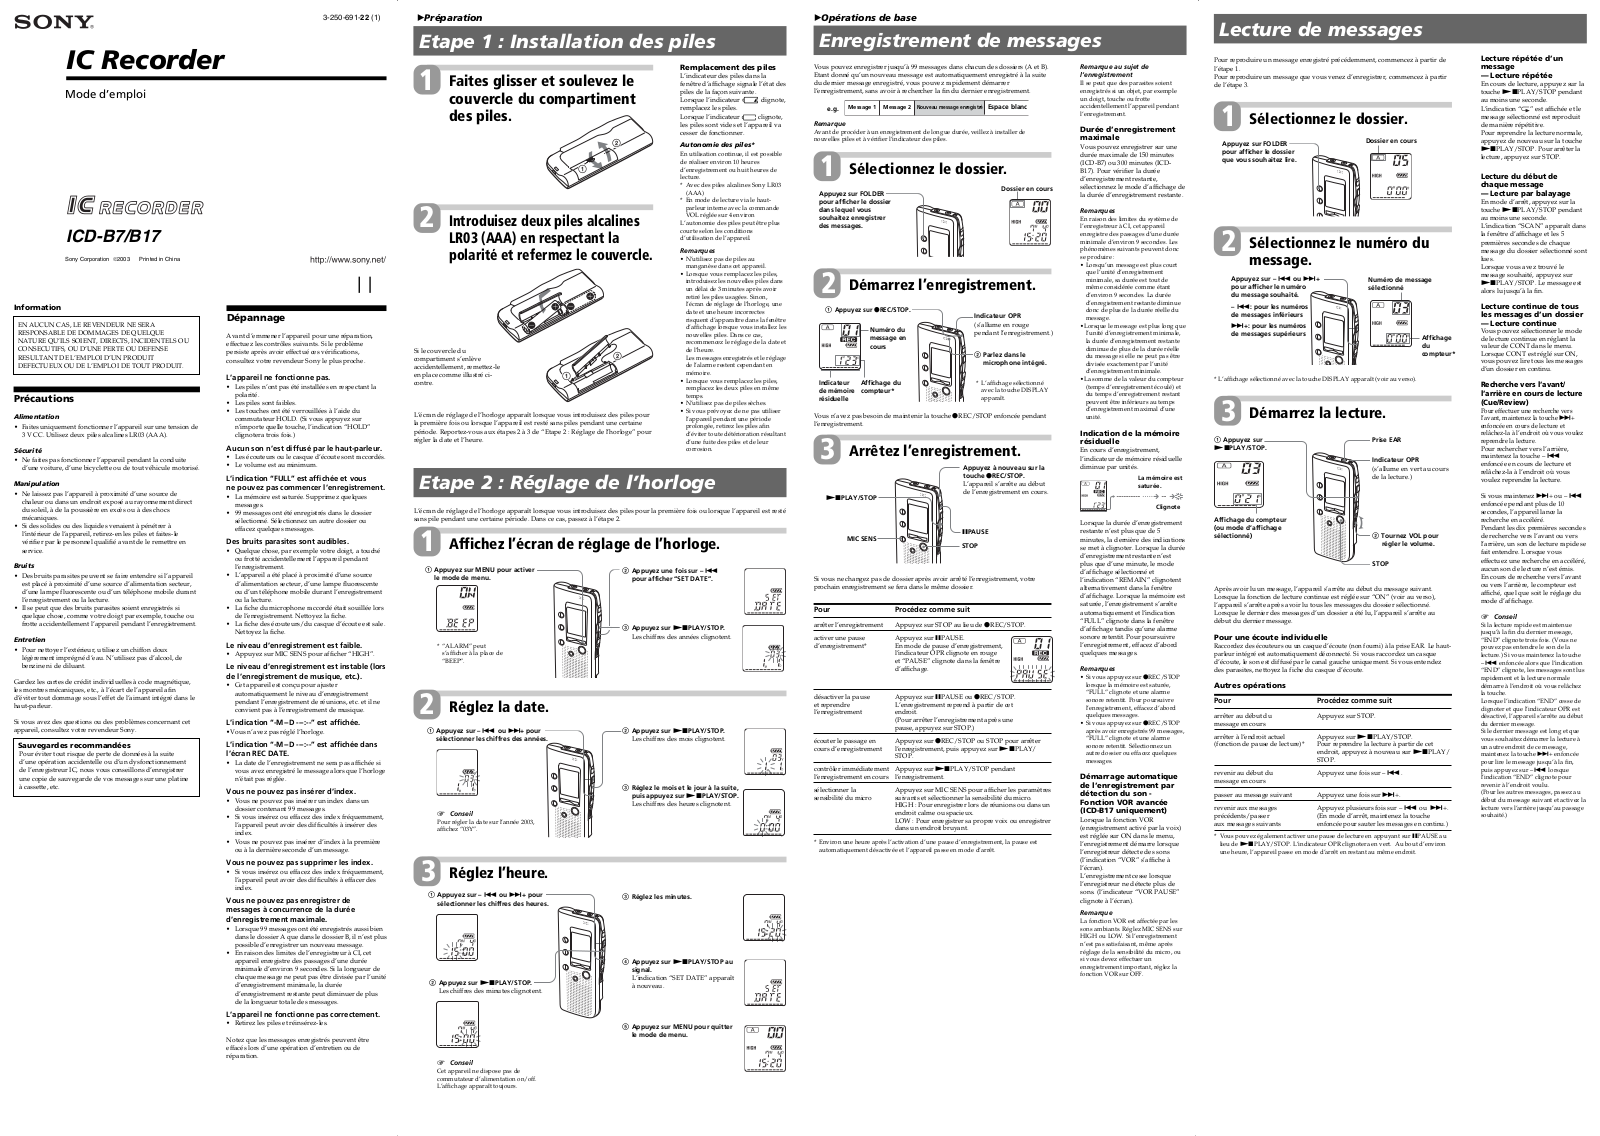 SONY ICD-B17 User Manual